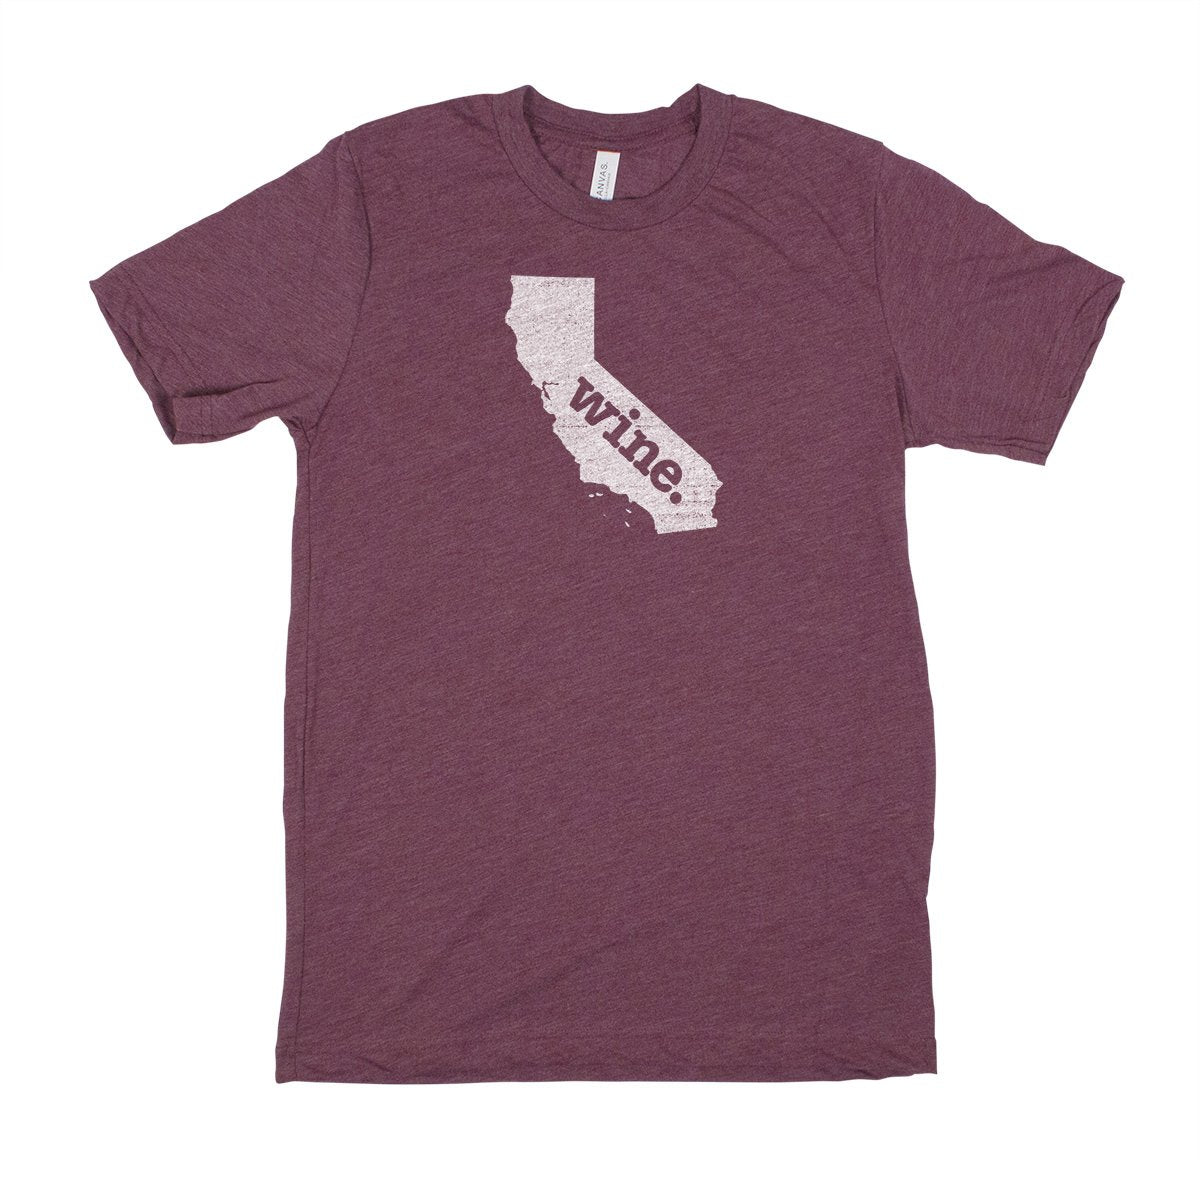 run. Men's Unisex T-Shirt - New Mexico